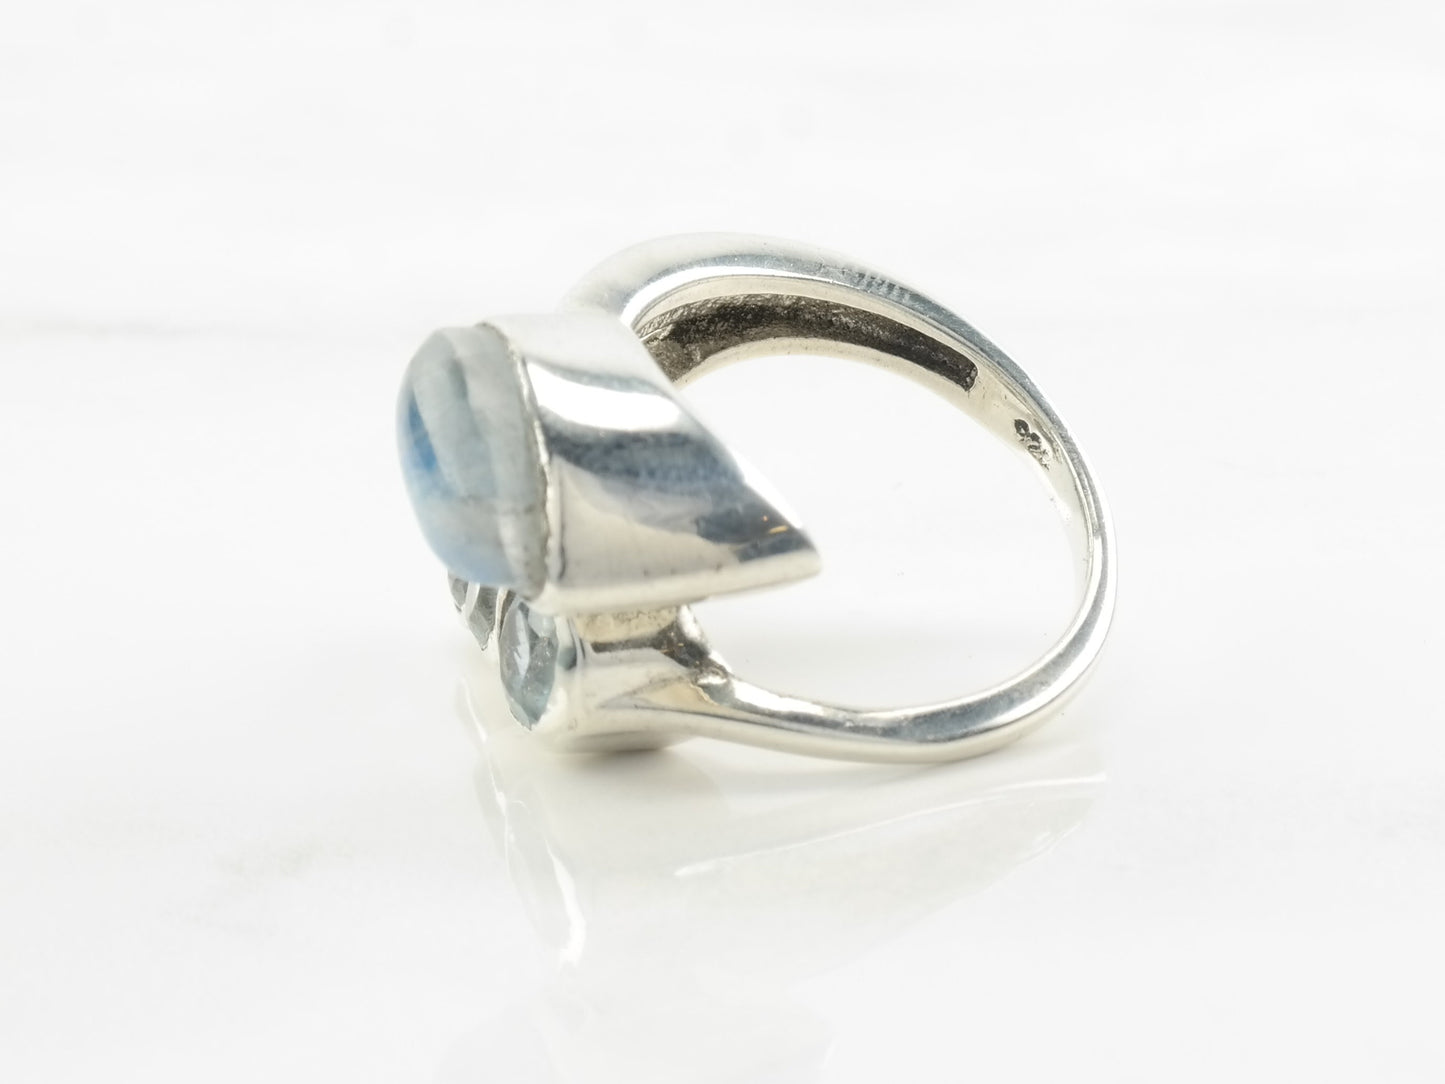 Vintage Topaz, Moonstone Ring Sterling Silver Size 6